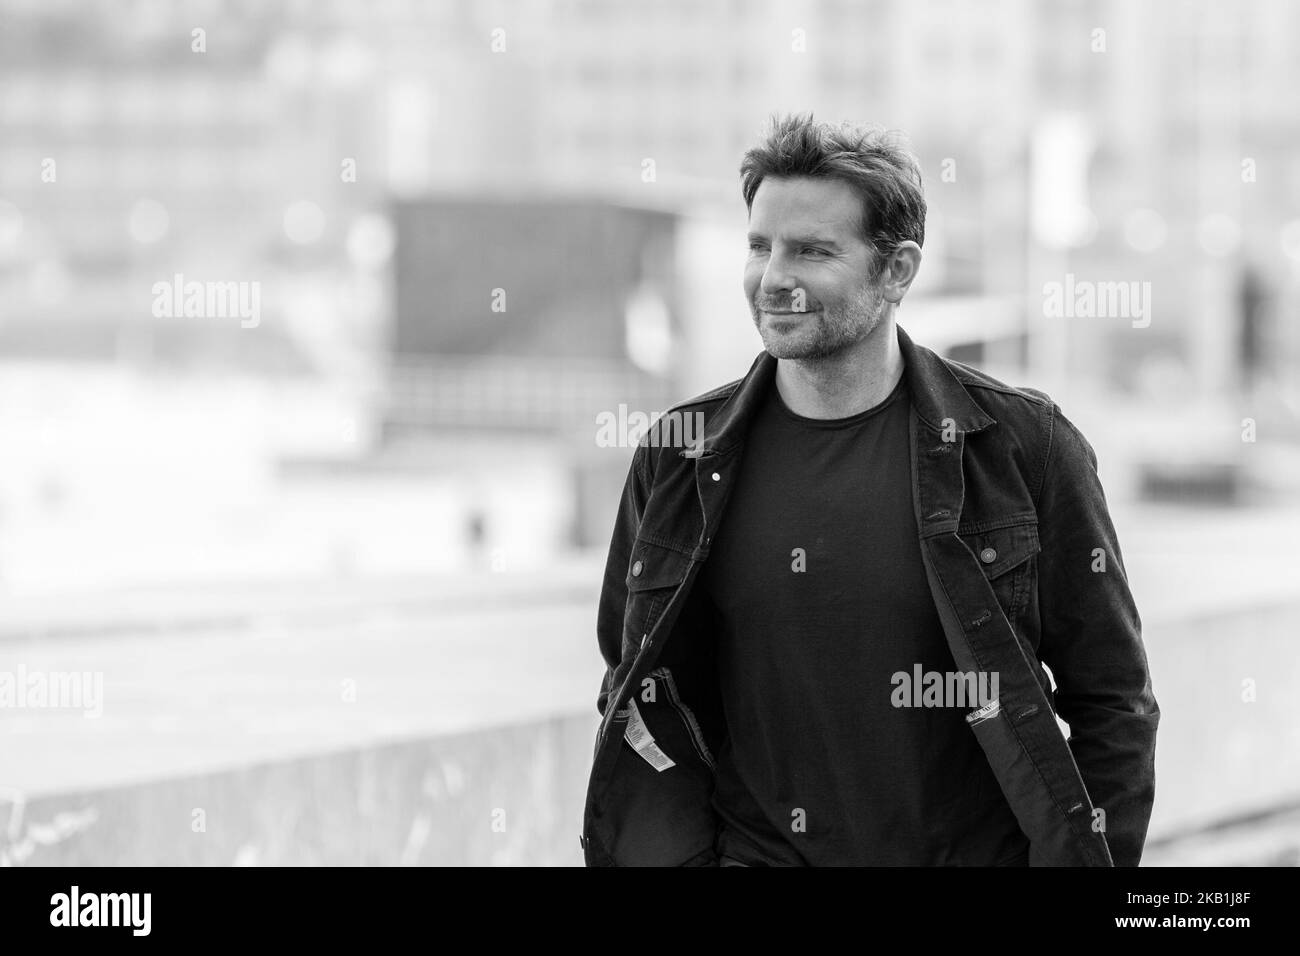 Bradley Cooper A Star is Born Premiere in Paris October 1, 2018